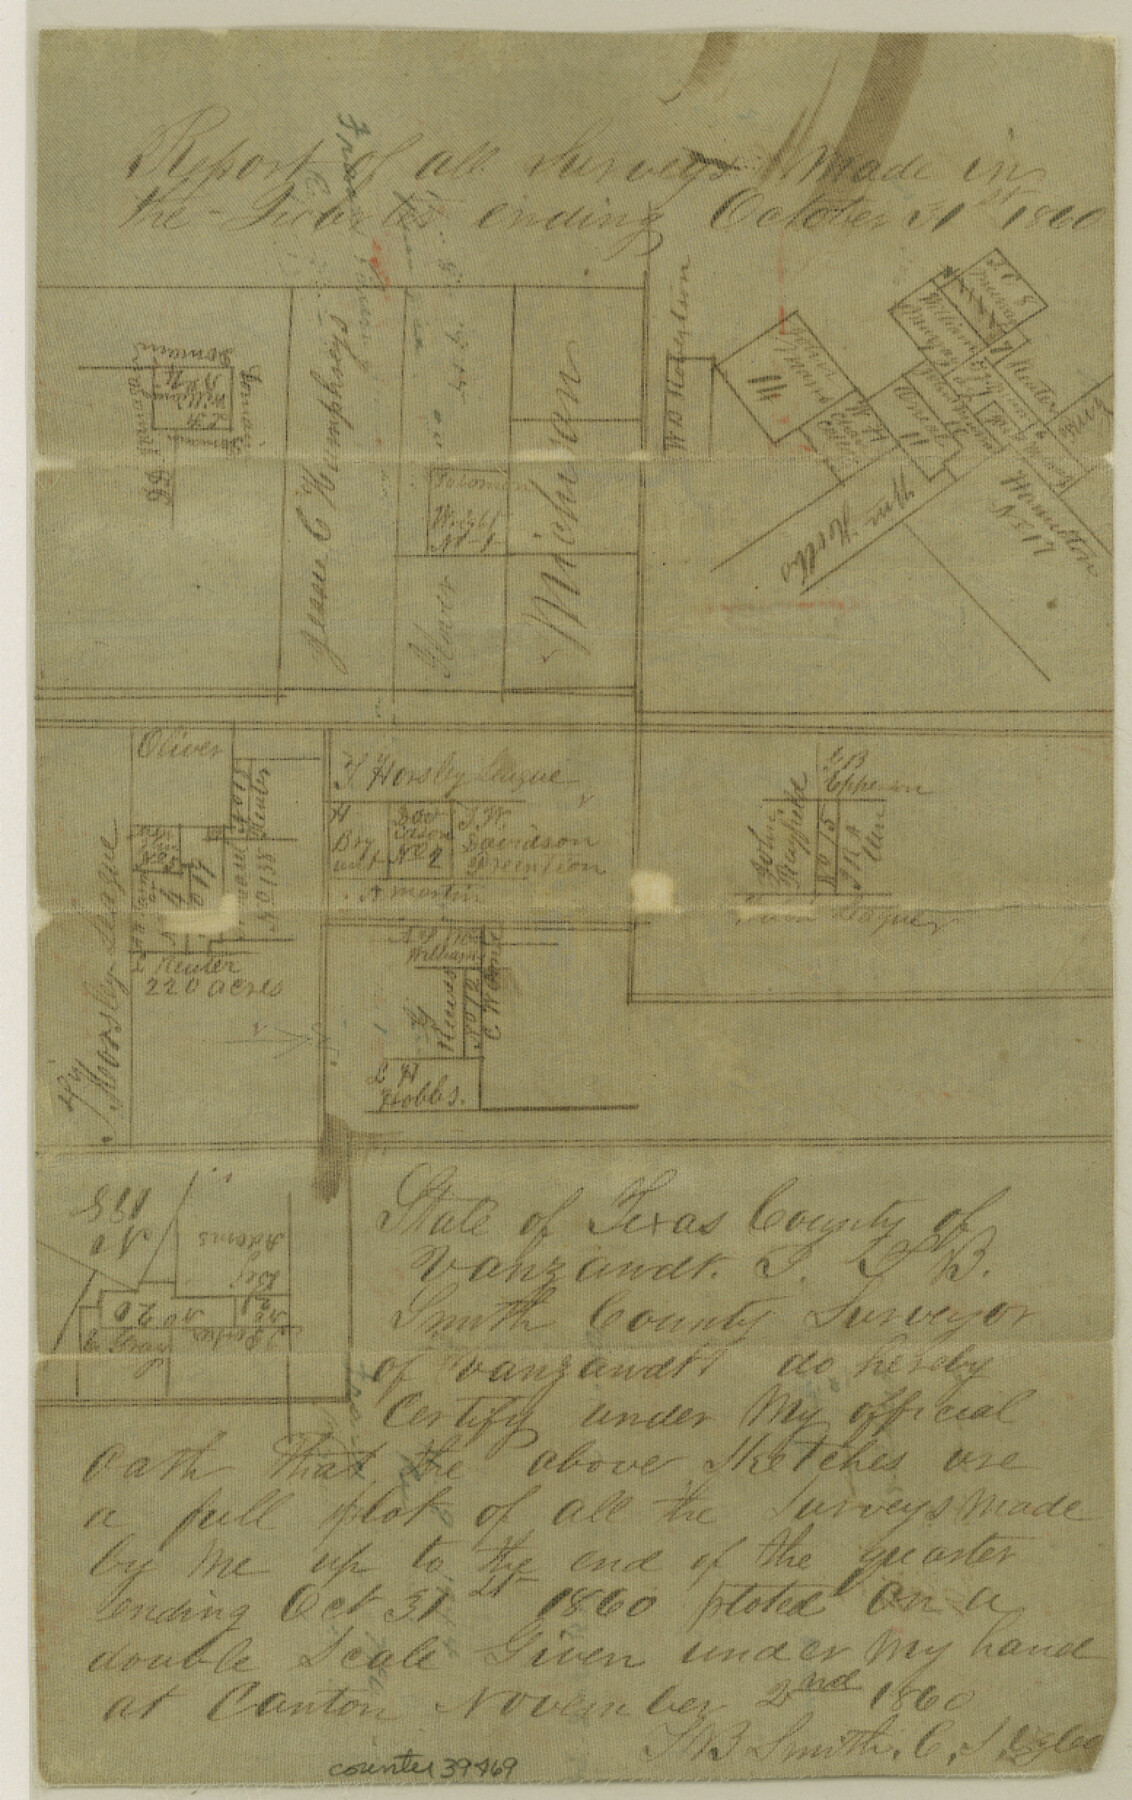 39469, Van Zandt County Sketch File 33, General Map Collection